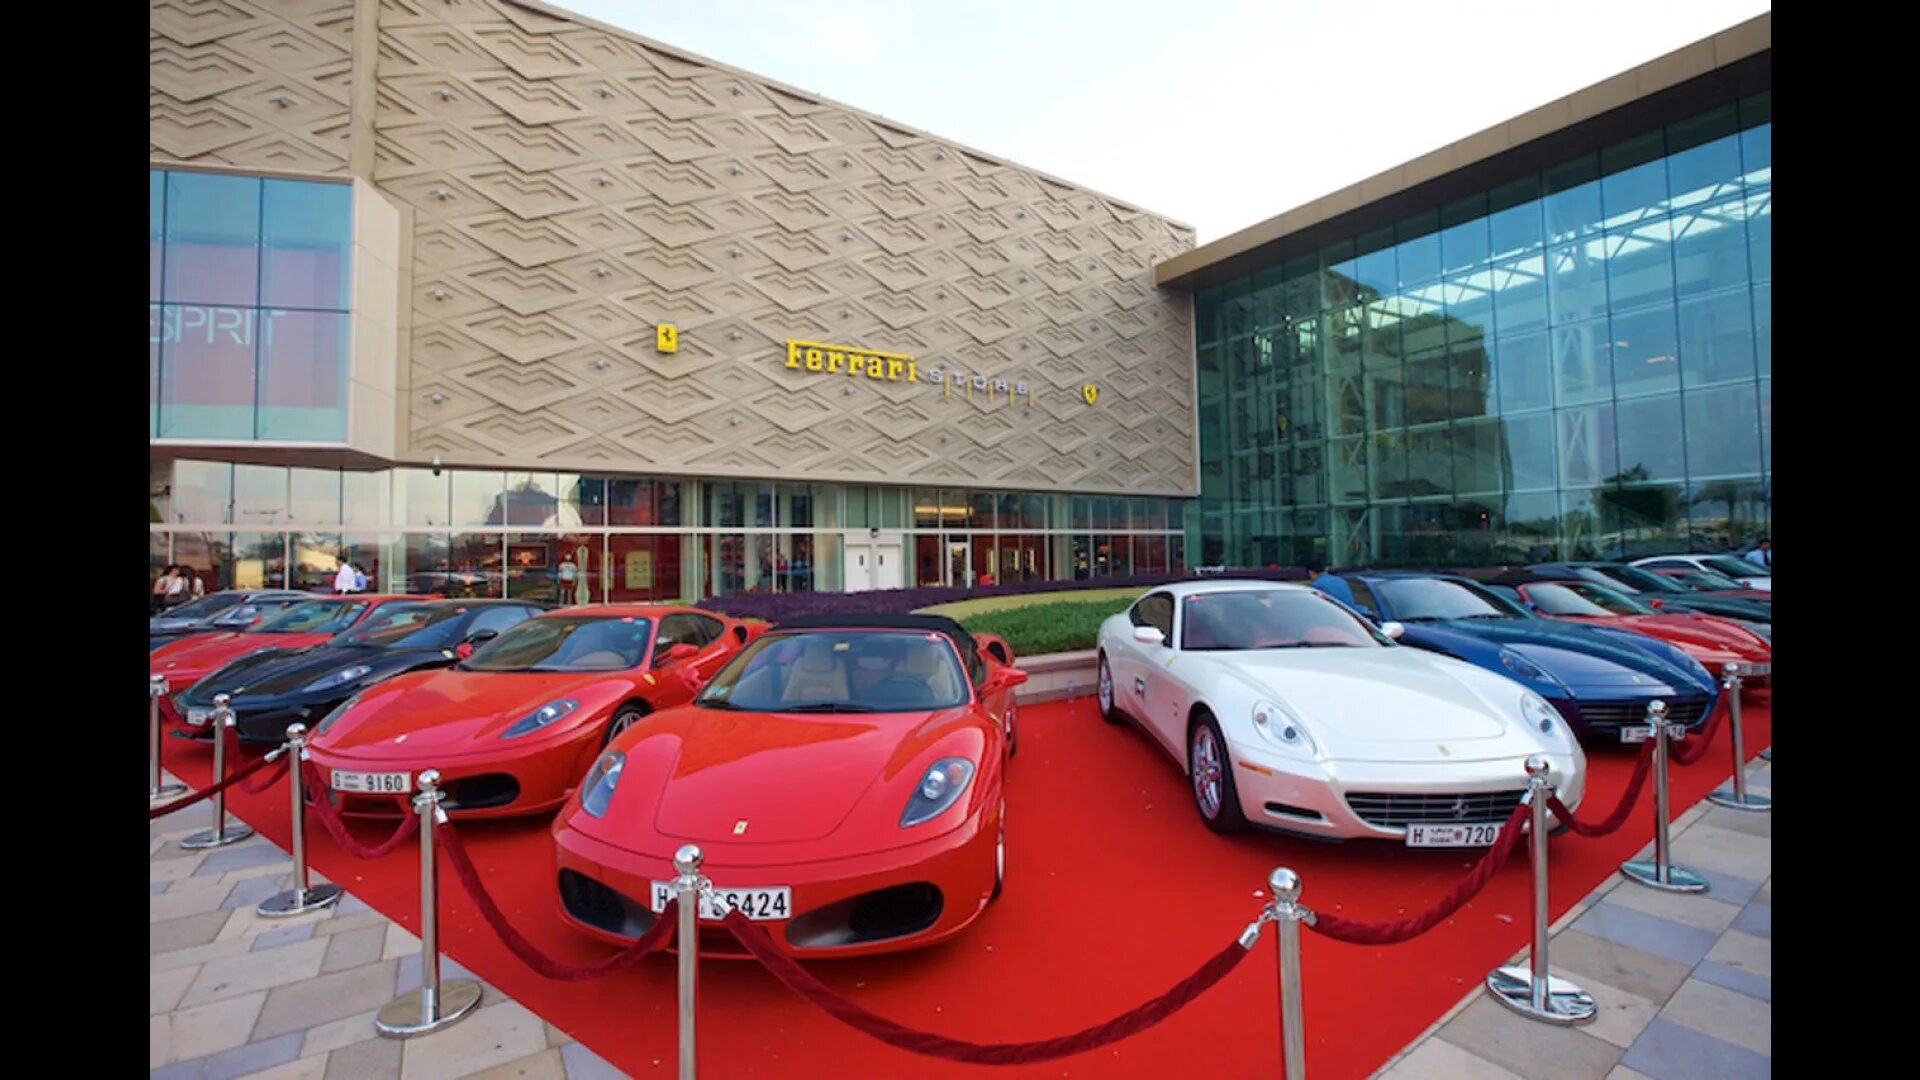 That is car in the shop. Ferrari Store Дубай. Автосалон Феррари в Дубае. Ferrari shop Dubai. Выставочный комплекс Феррари в Дубае.